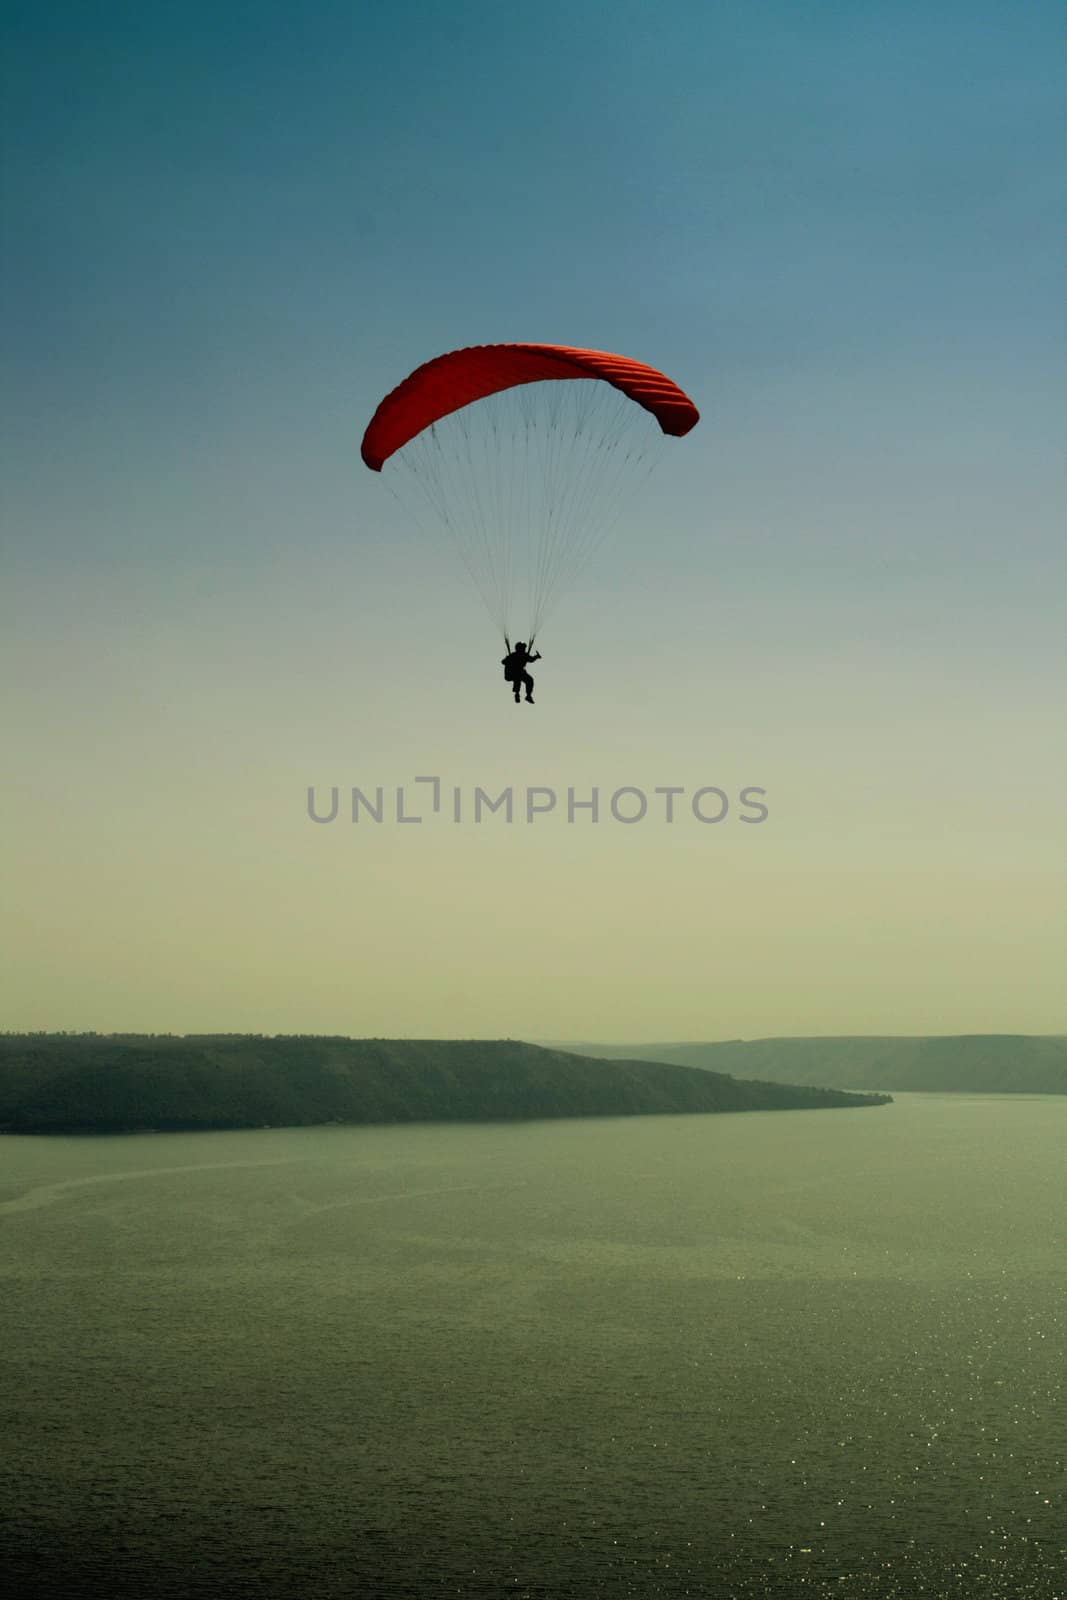 The parachutist in flight by KadunmatriX